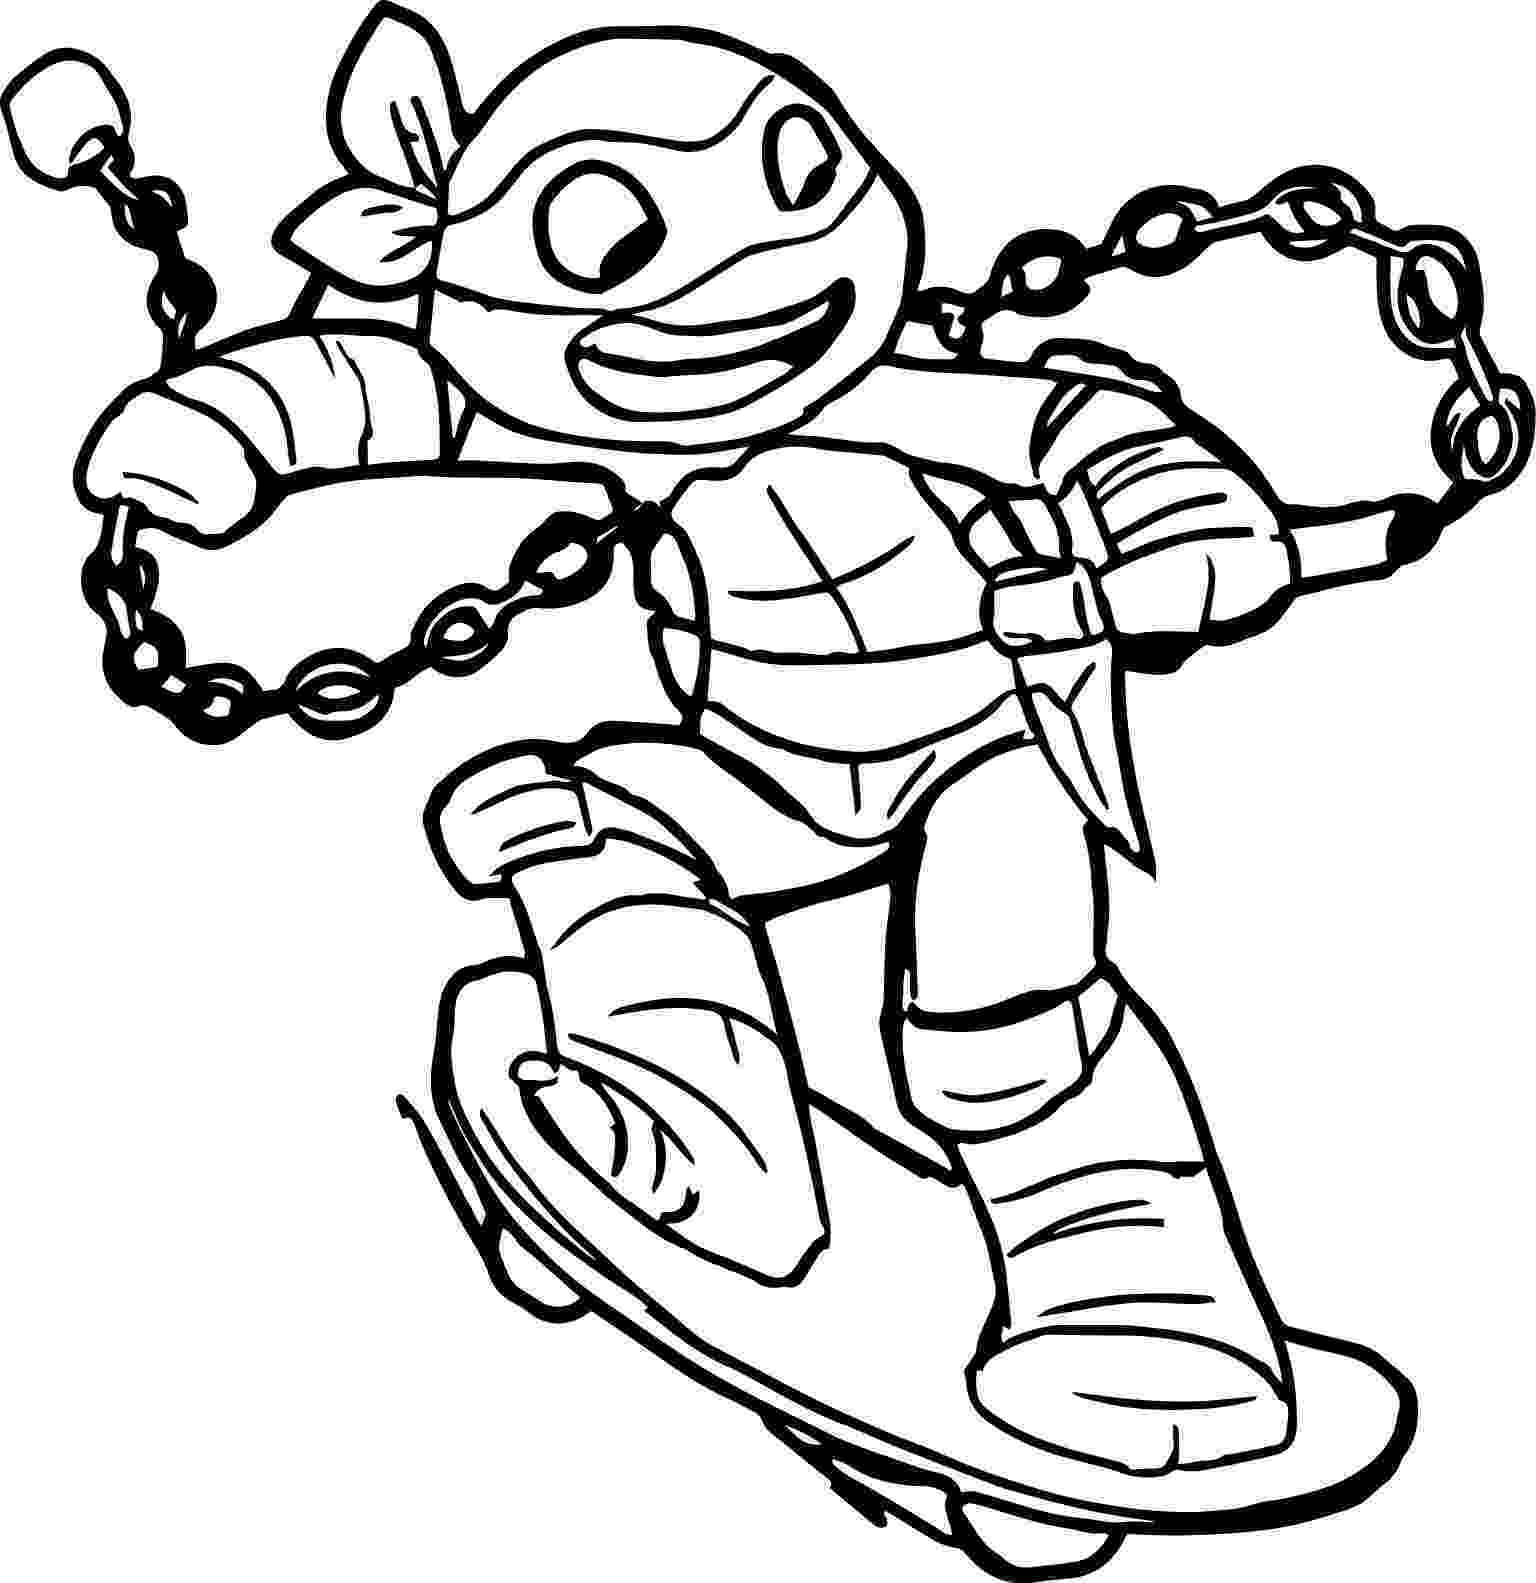 ninja turtle coloring page ninja turtle coloring pages free printable pictures ninja page coloring turtle 